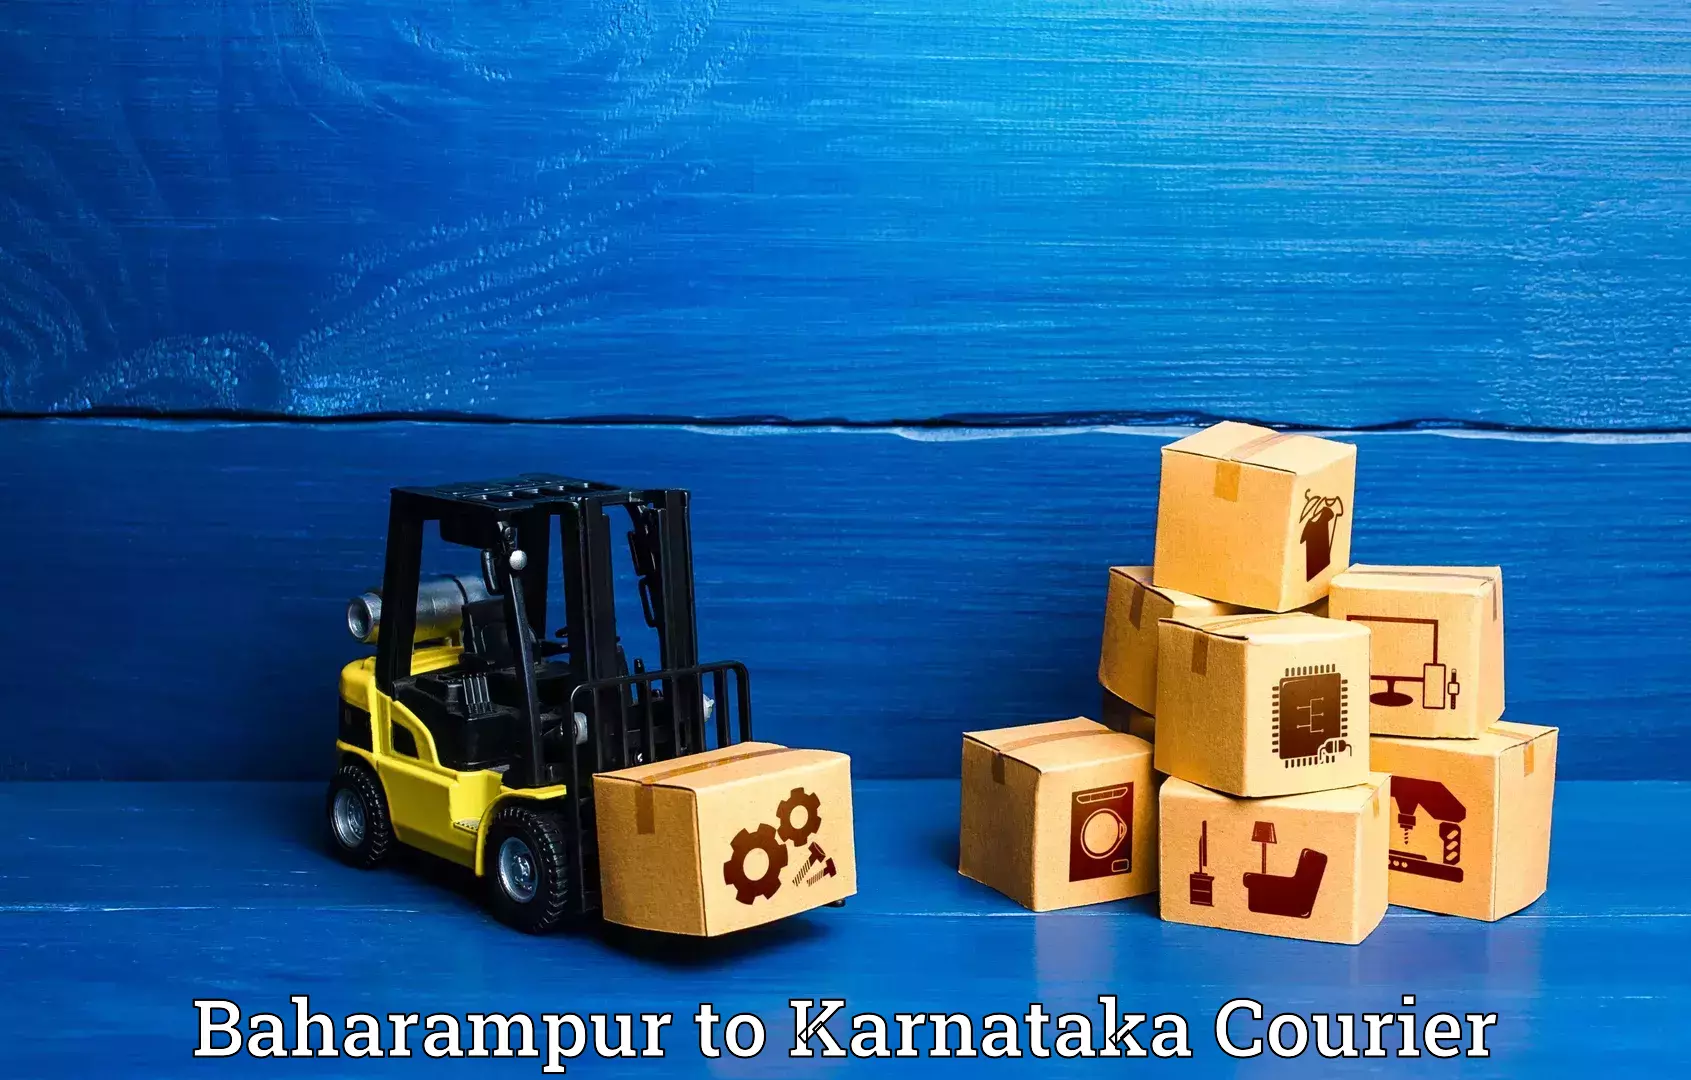 Baggage transport innovation Baharampur to Karnataka